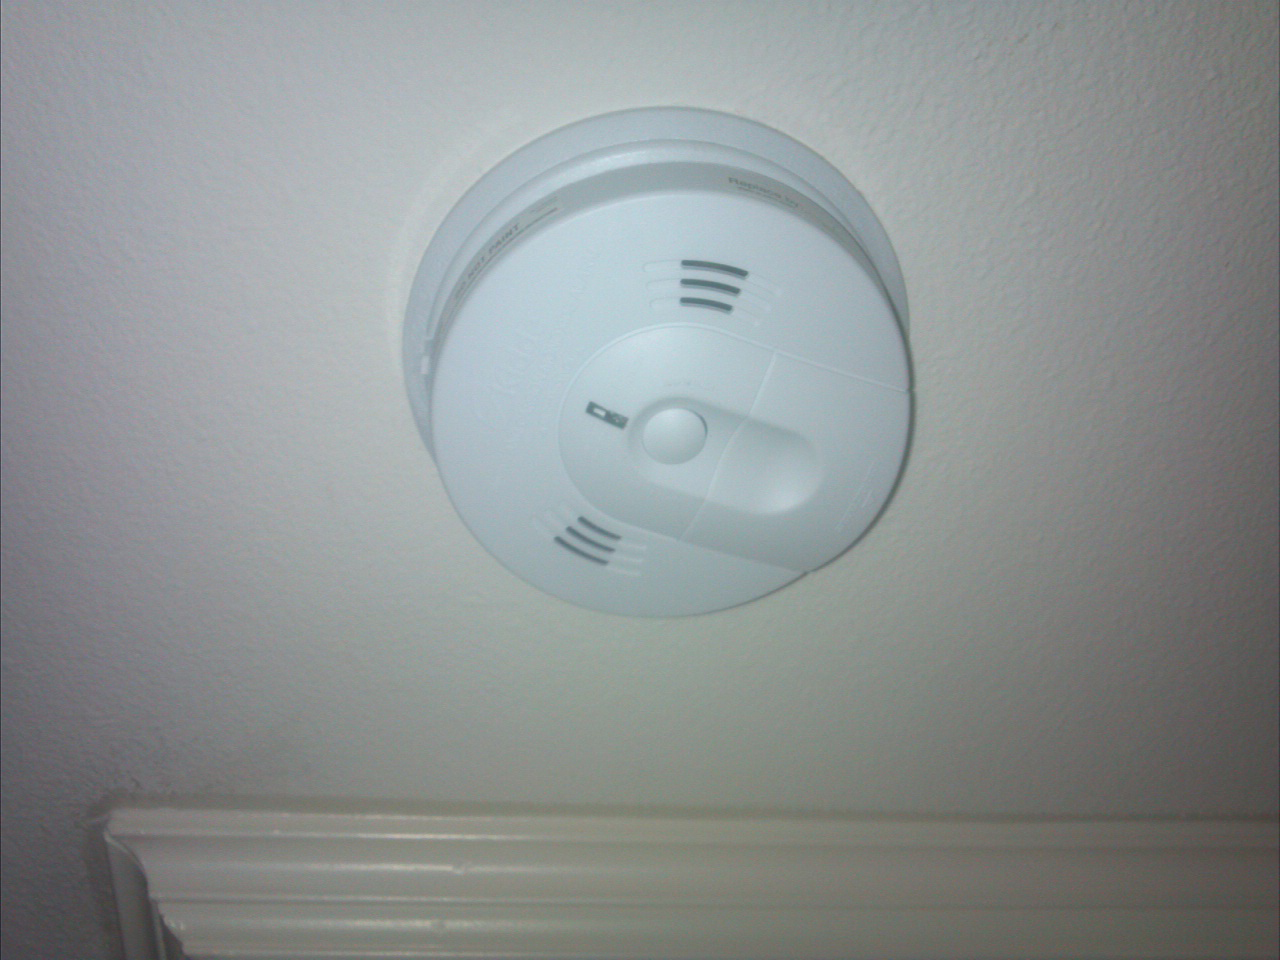 Install carbon monoxide Detector